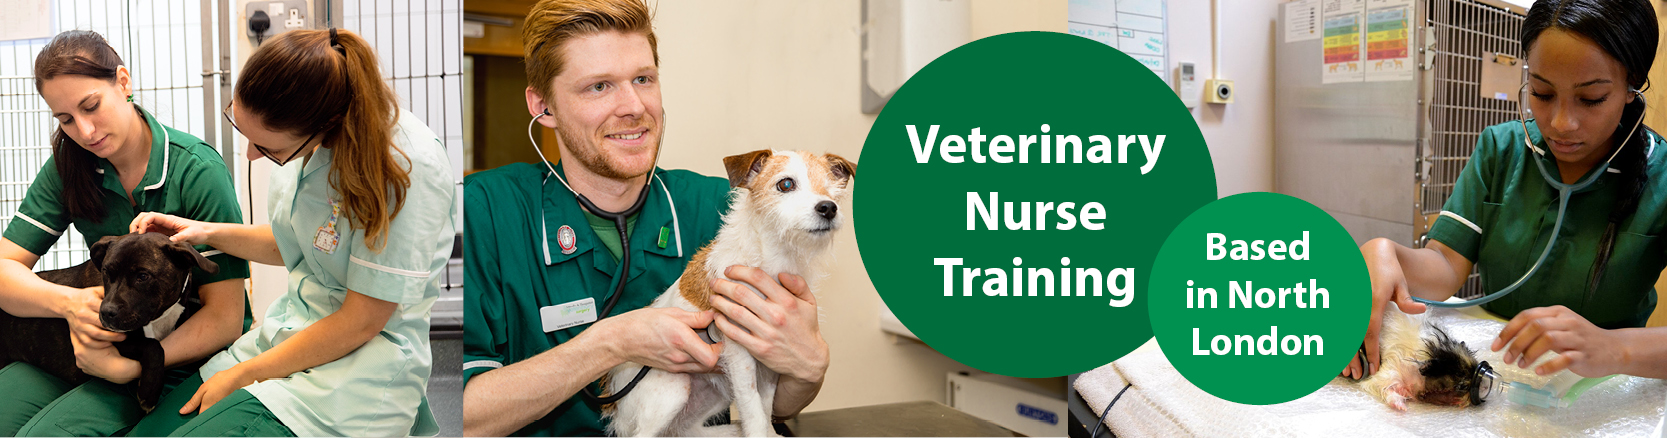 Veterinary Nurse Training in North London